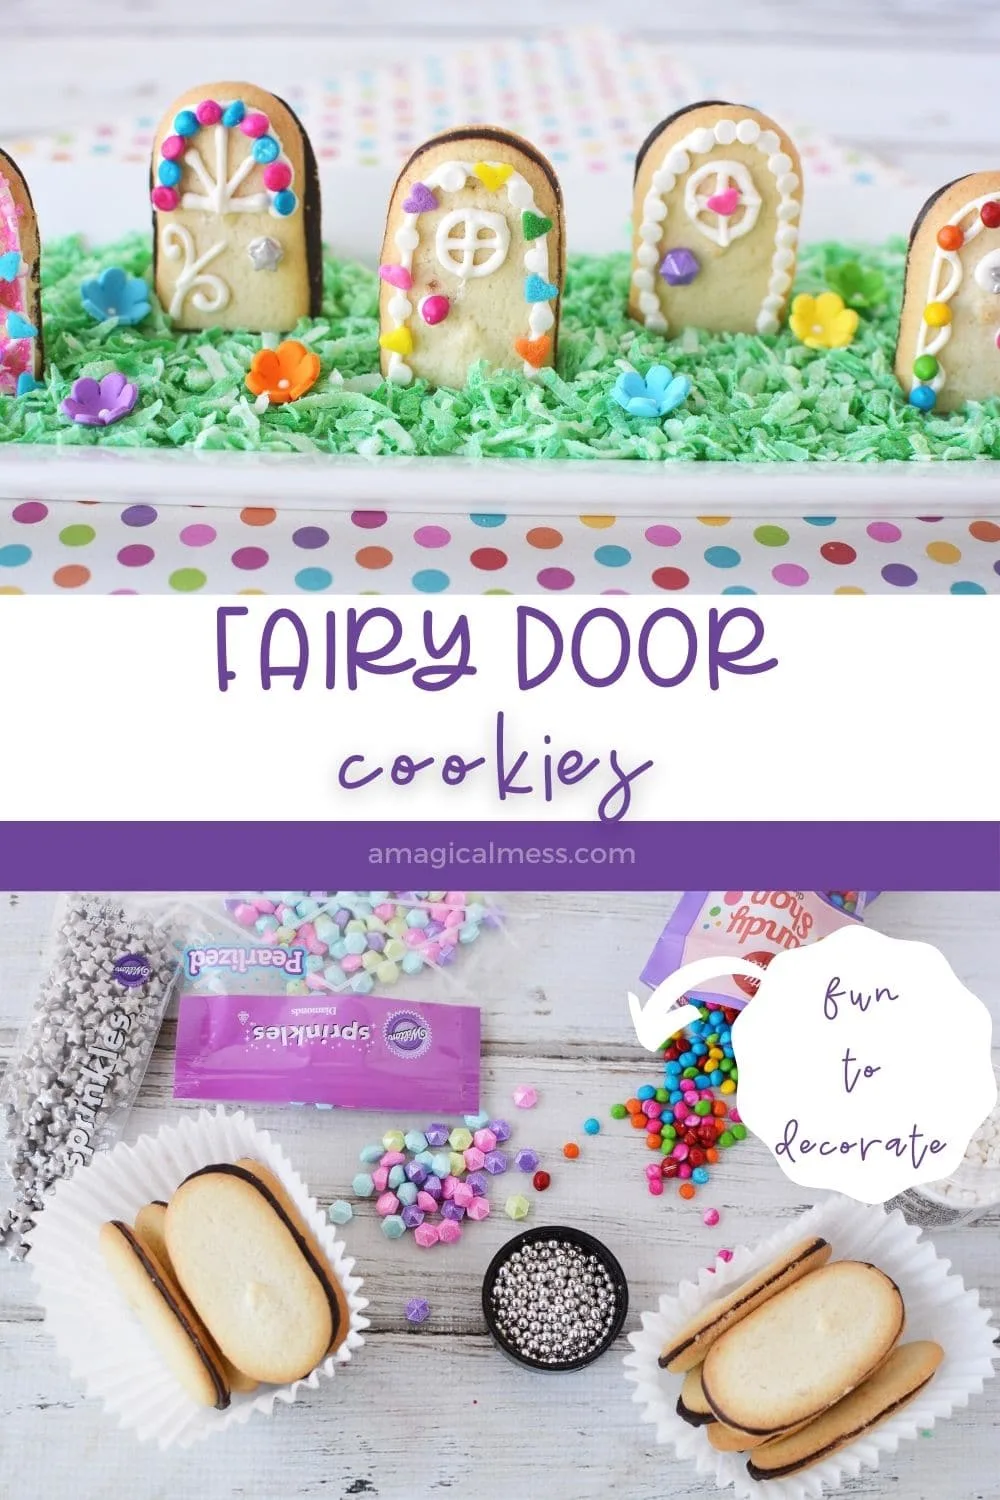 fairy door cookies and ingredients to make them